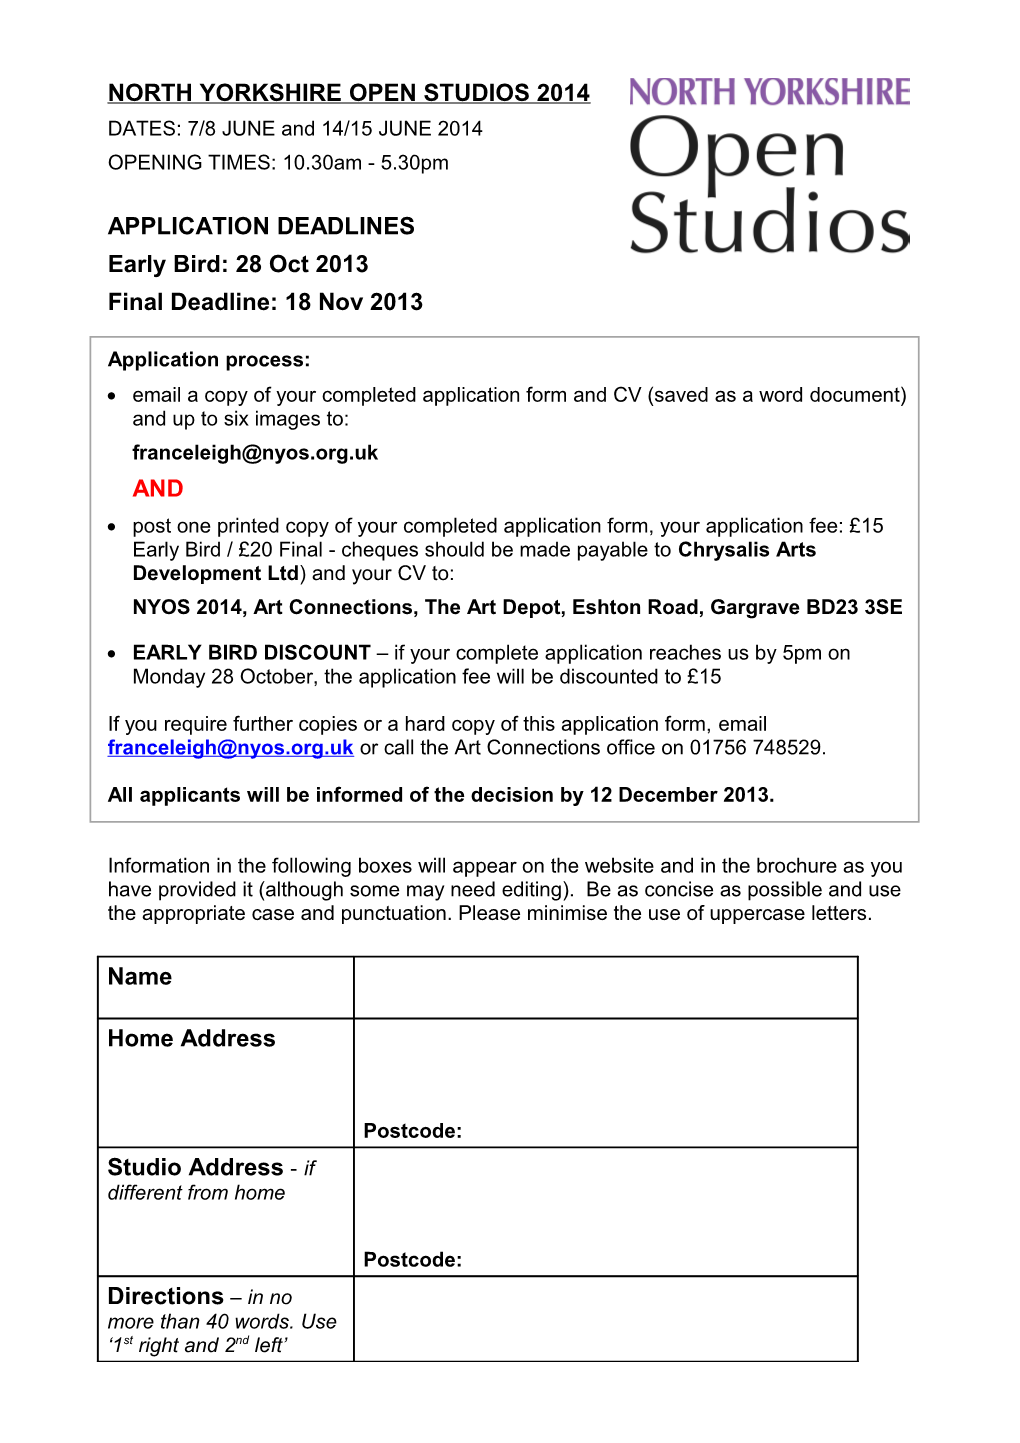 North Yorkshire Open Studios 2011 Application Form